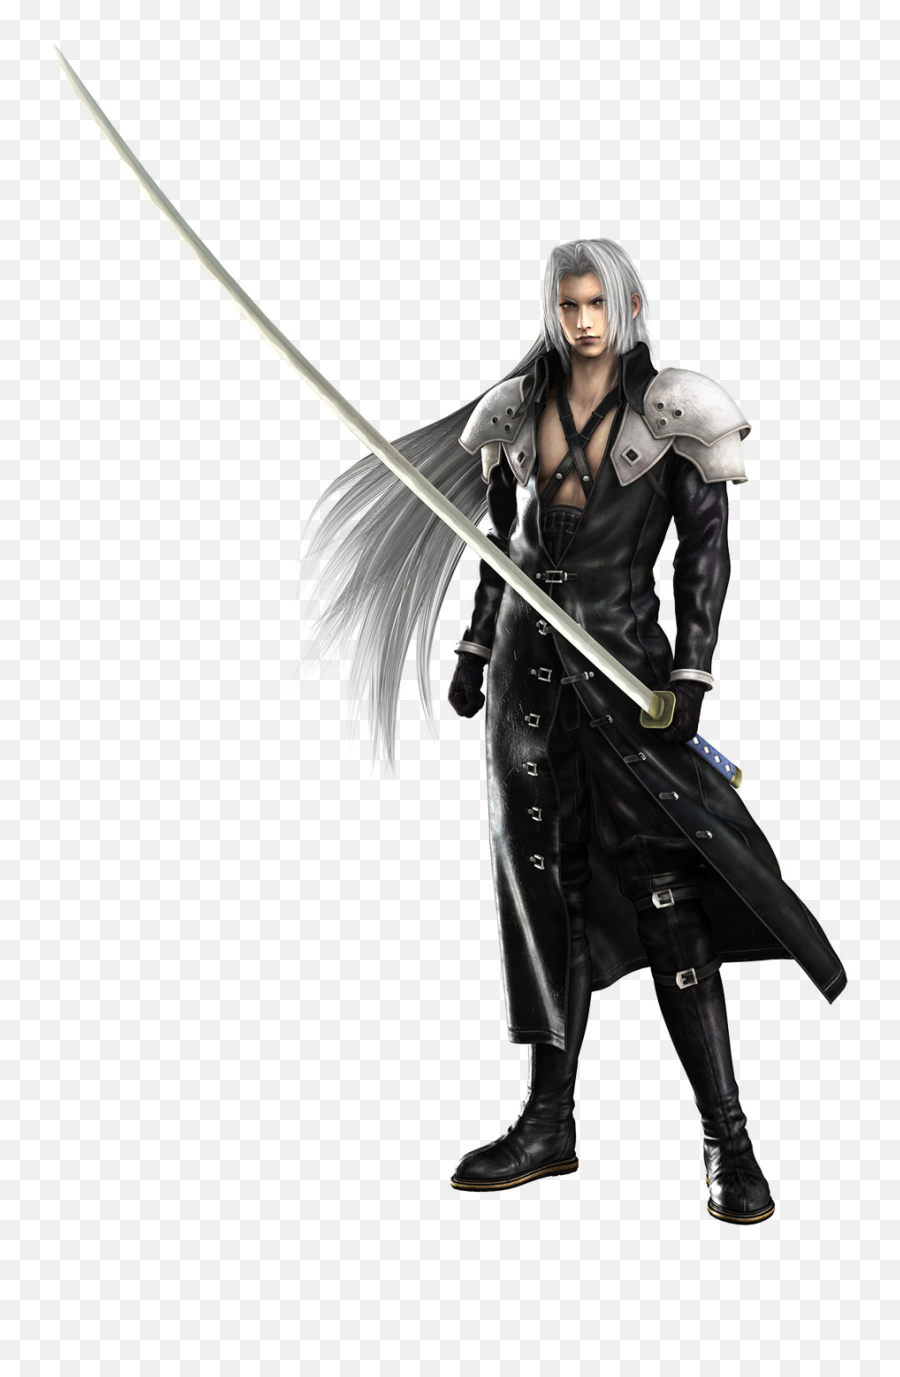 Sephiroth Png Image - Final Fantasy Sephiroth Sword,Sephiroth Png